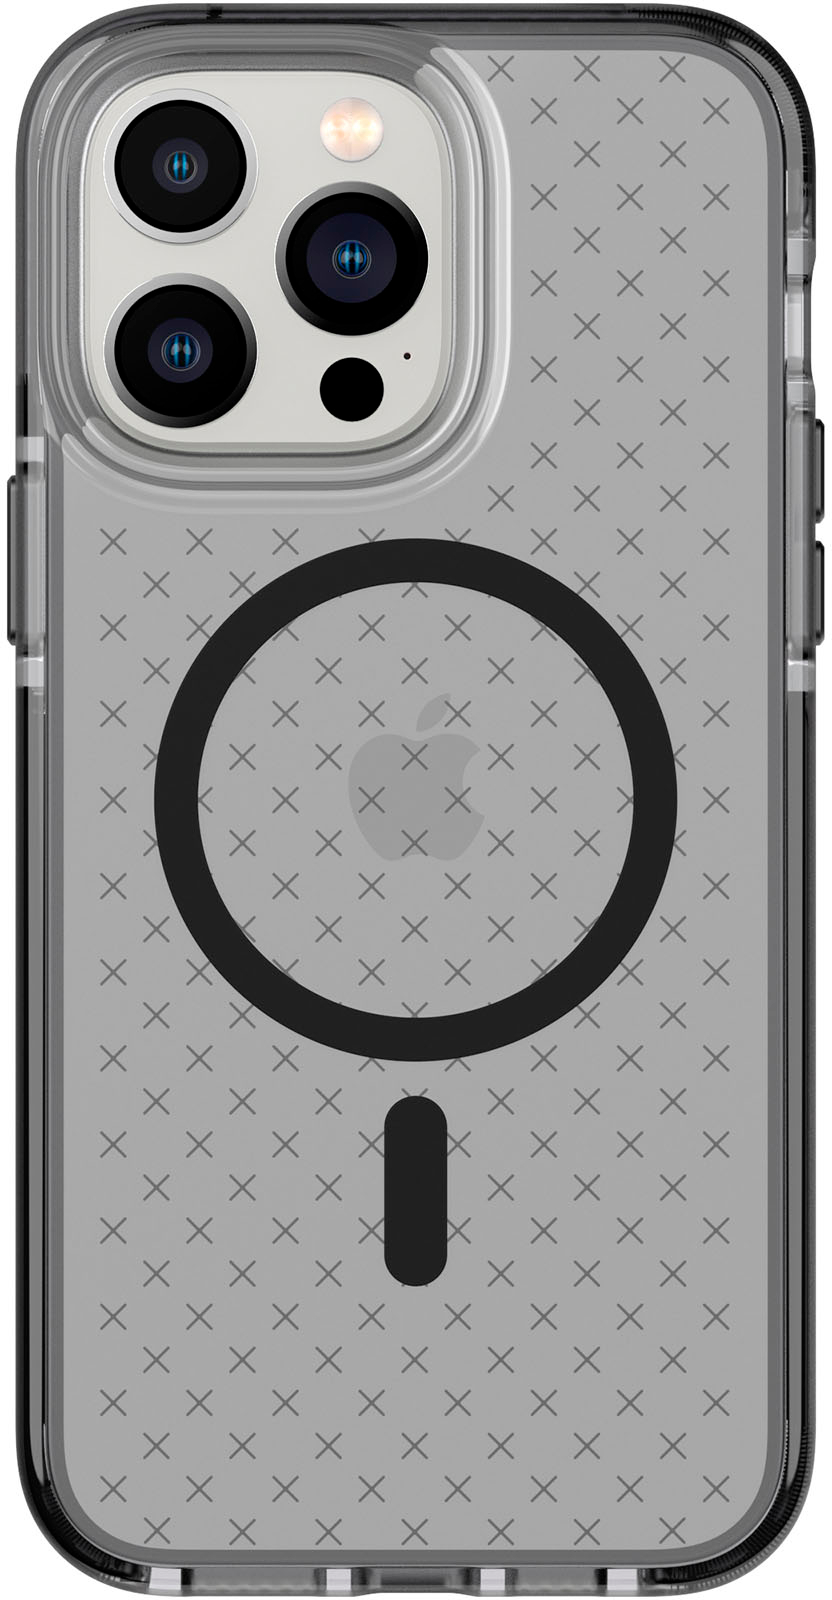 Evo Lite - Apple iPhone 14 Pro Max Case - Clear